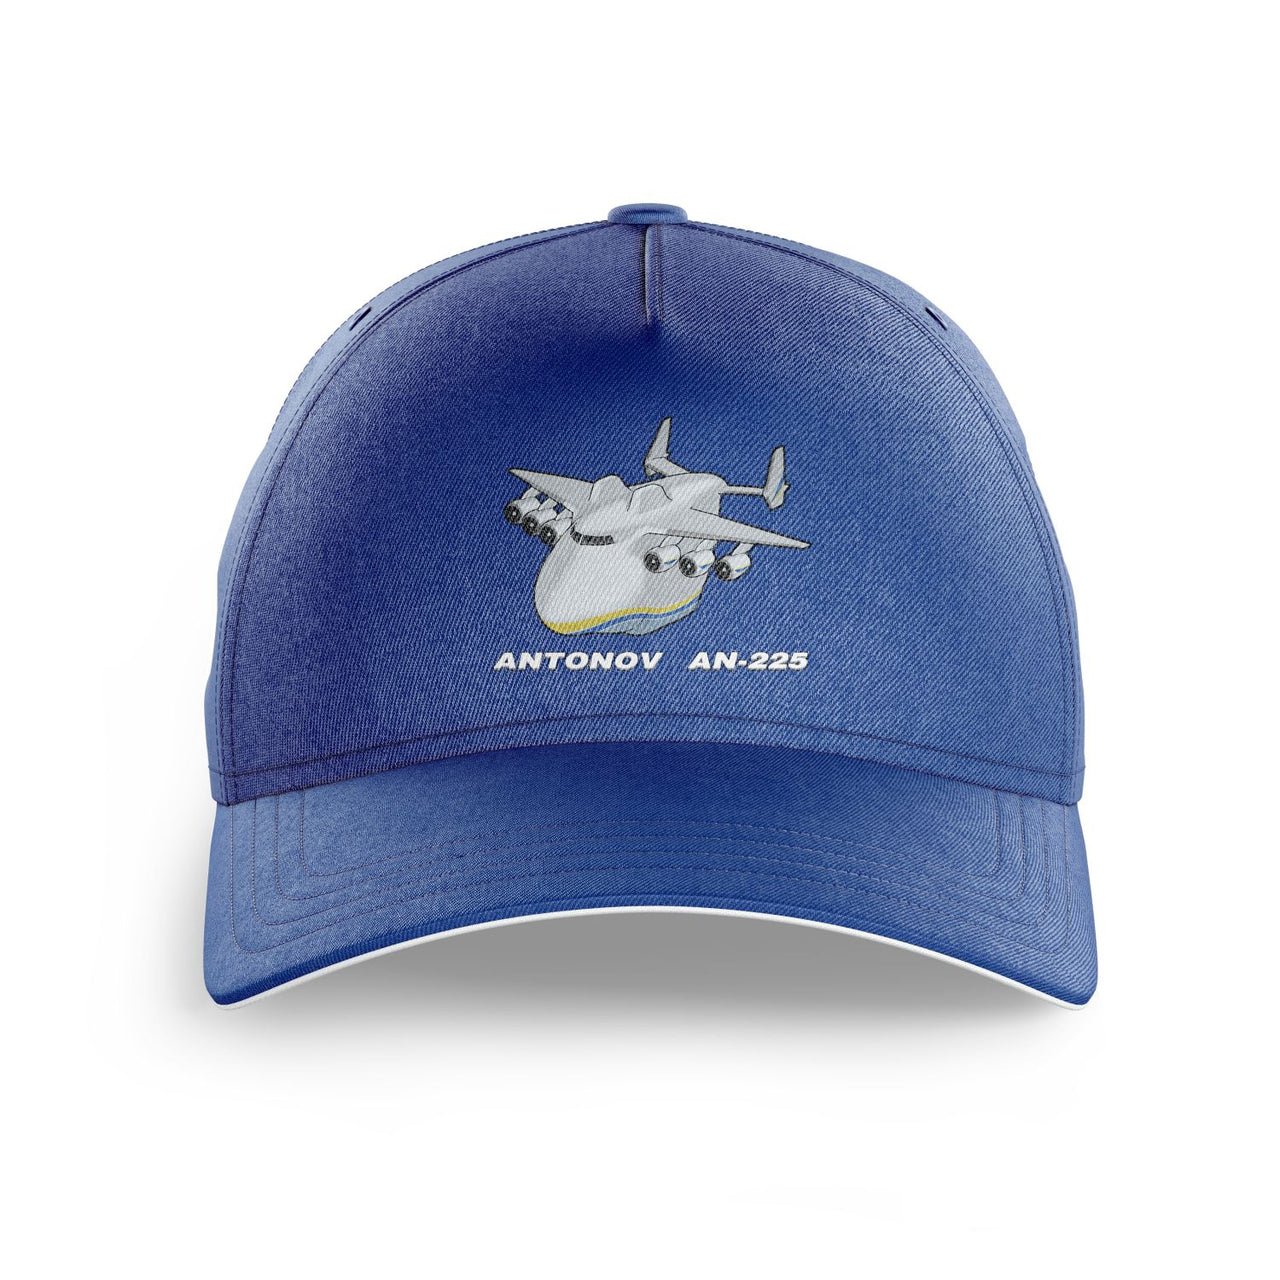 Antonov AN-225 (29) Printed Hats